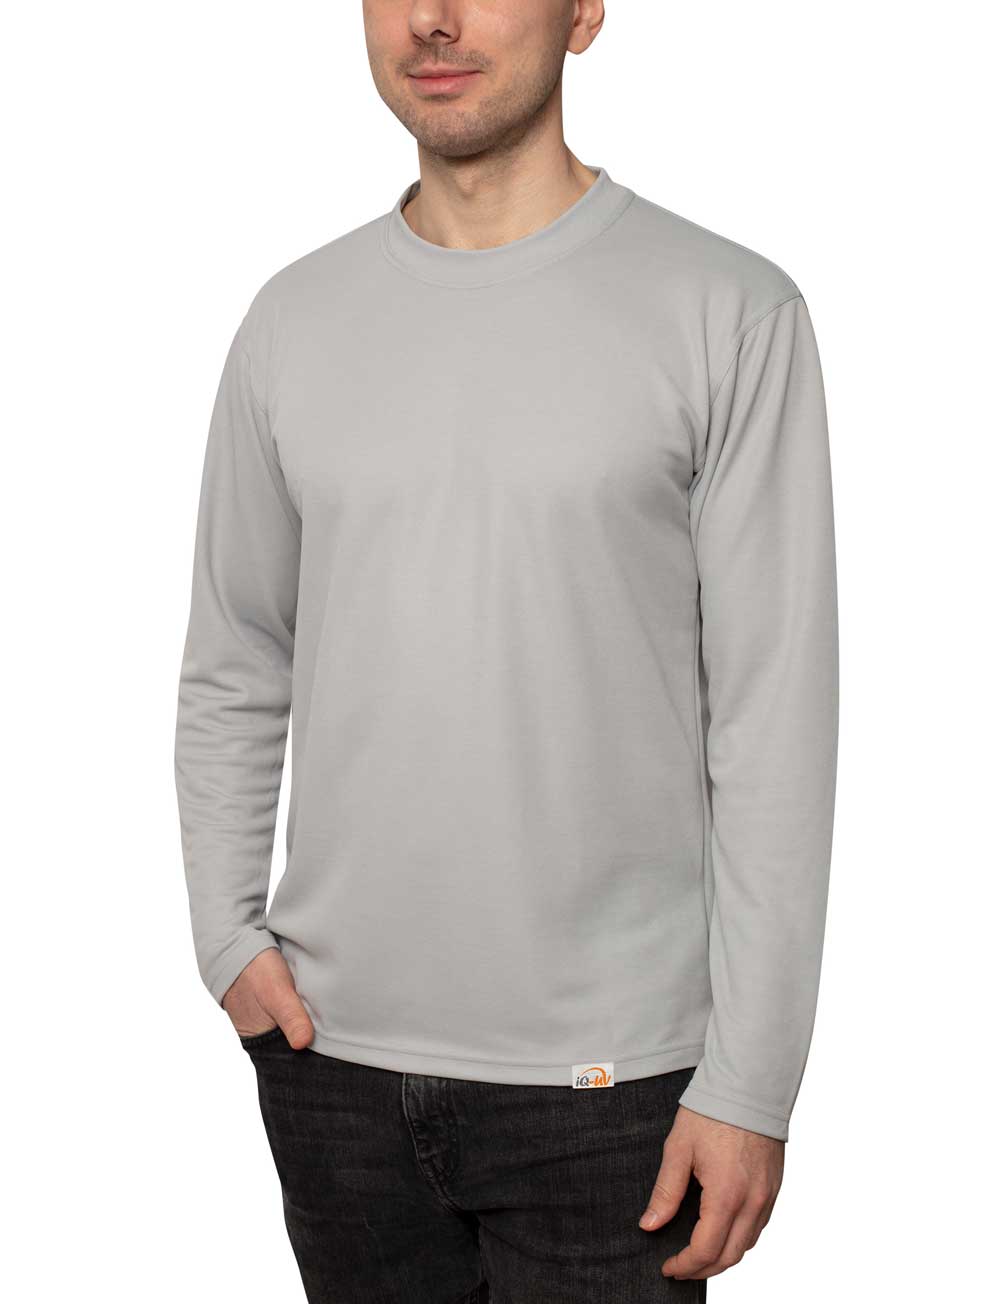 LSF 50+ Shirt für Herren langarm grau outdoor angezogen